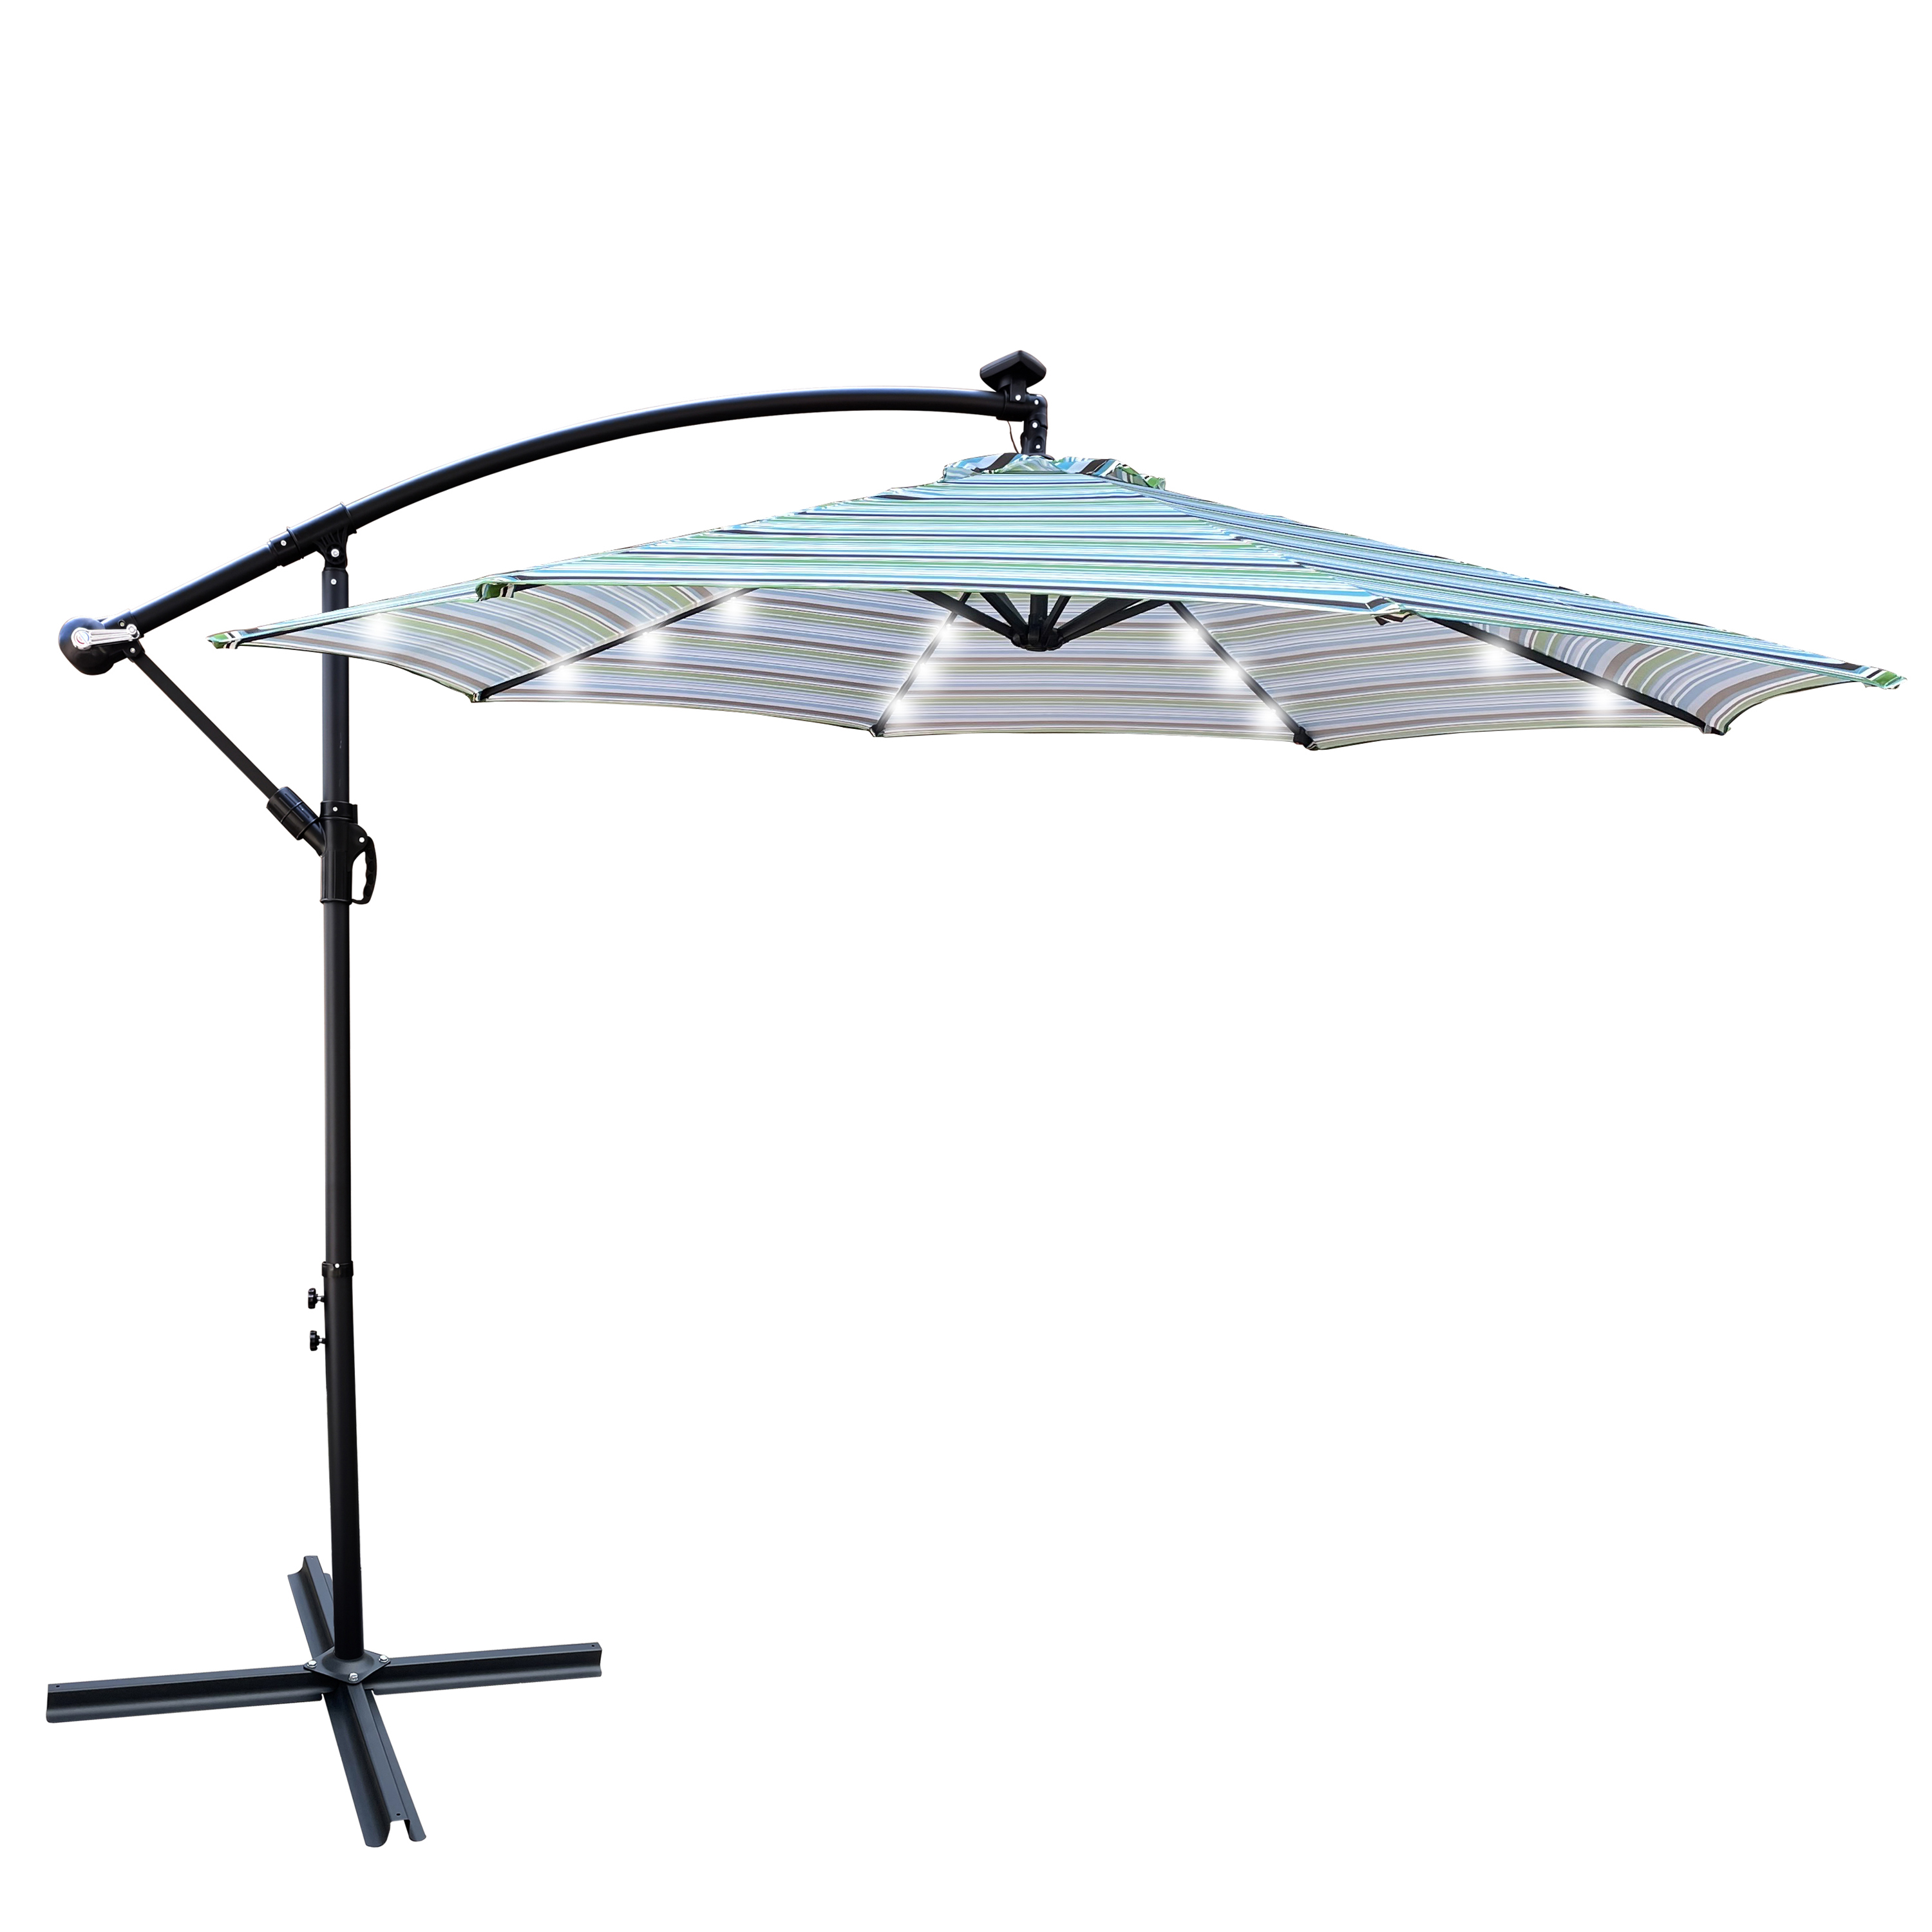 Branax Patio Umbrella, 10 FT Offset Patio Umbrella with Base Included, Outdoor Patio Umbrella with Solar Lights, Crank, Push Button Tilt, Large Patio Umbrella for Garden (Blue Striped) - image 1 of 7